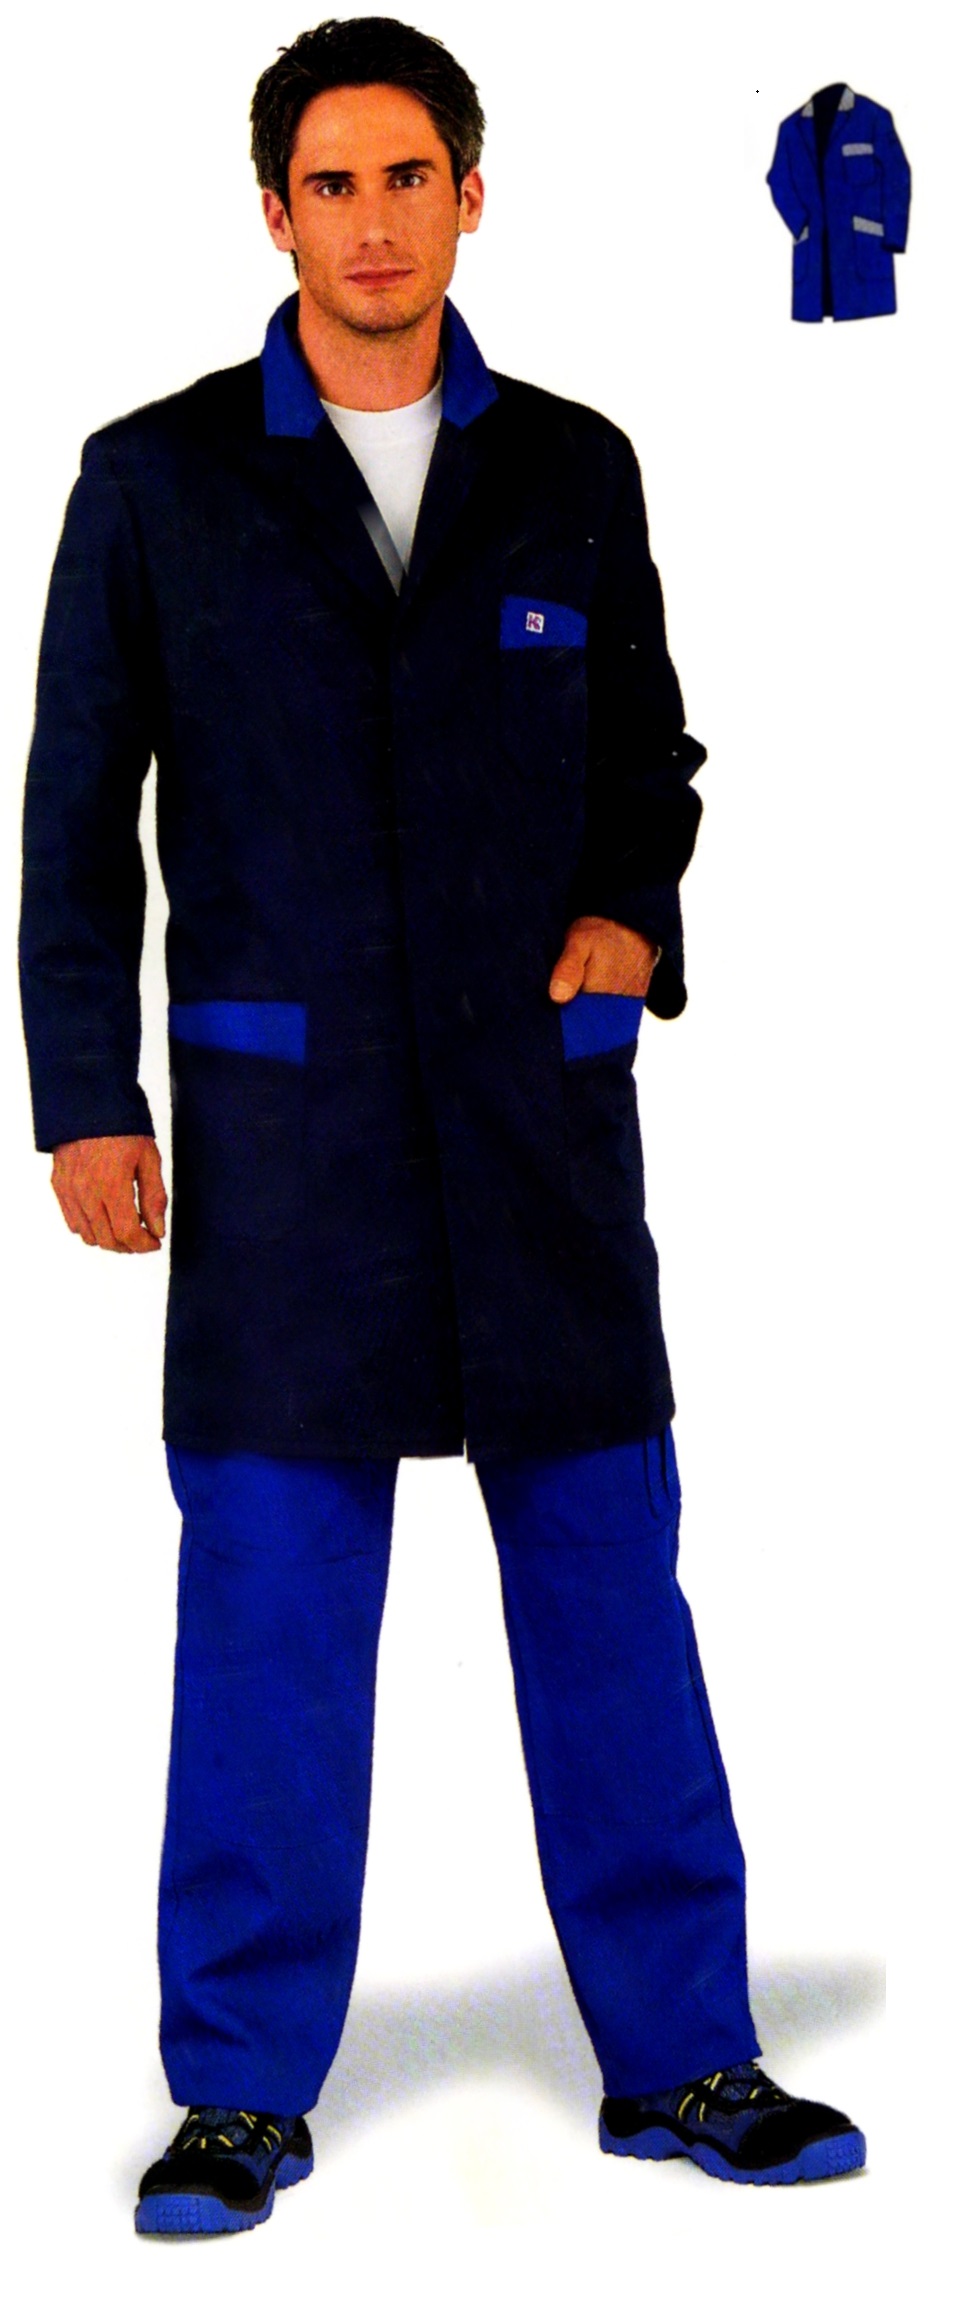 KÜBLER Berufsmantel Berufskittel Arbeitsmantel Arbeitskittel Image Dress mit Kontrastteilen kornblau hellgrau